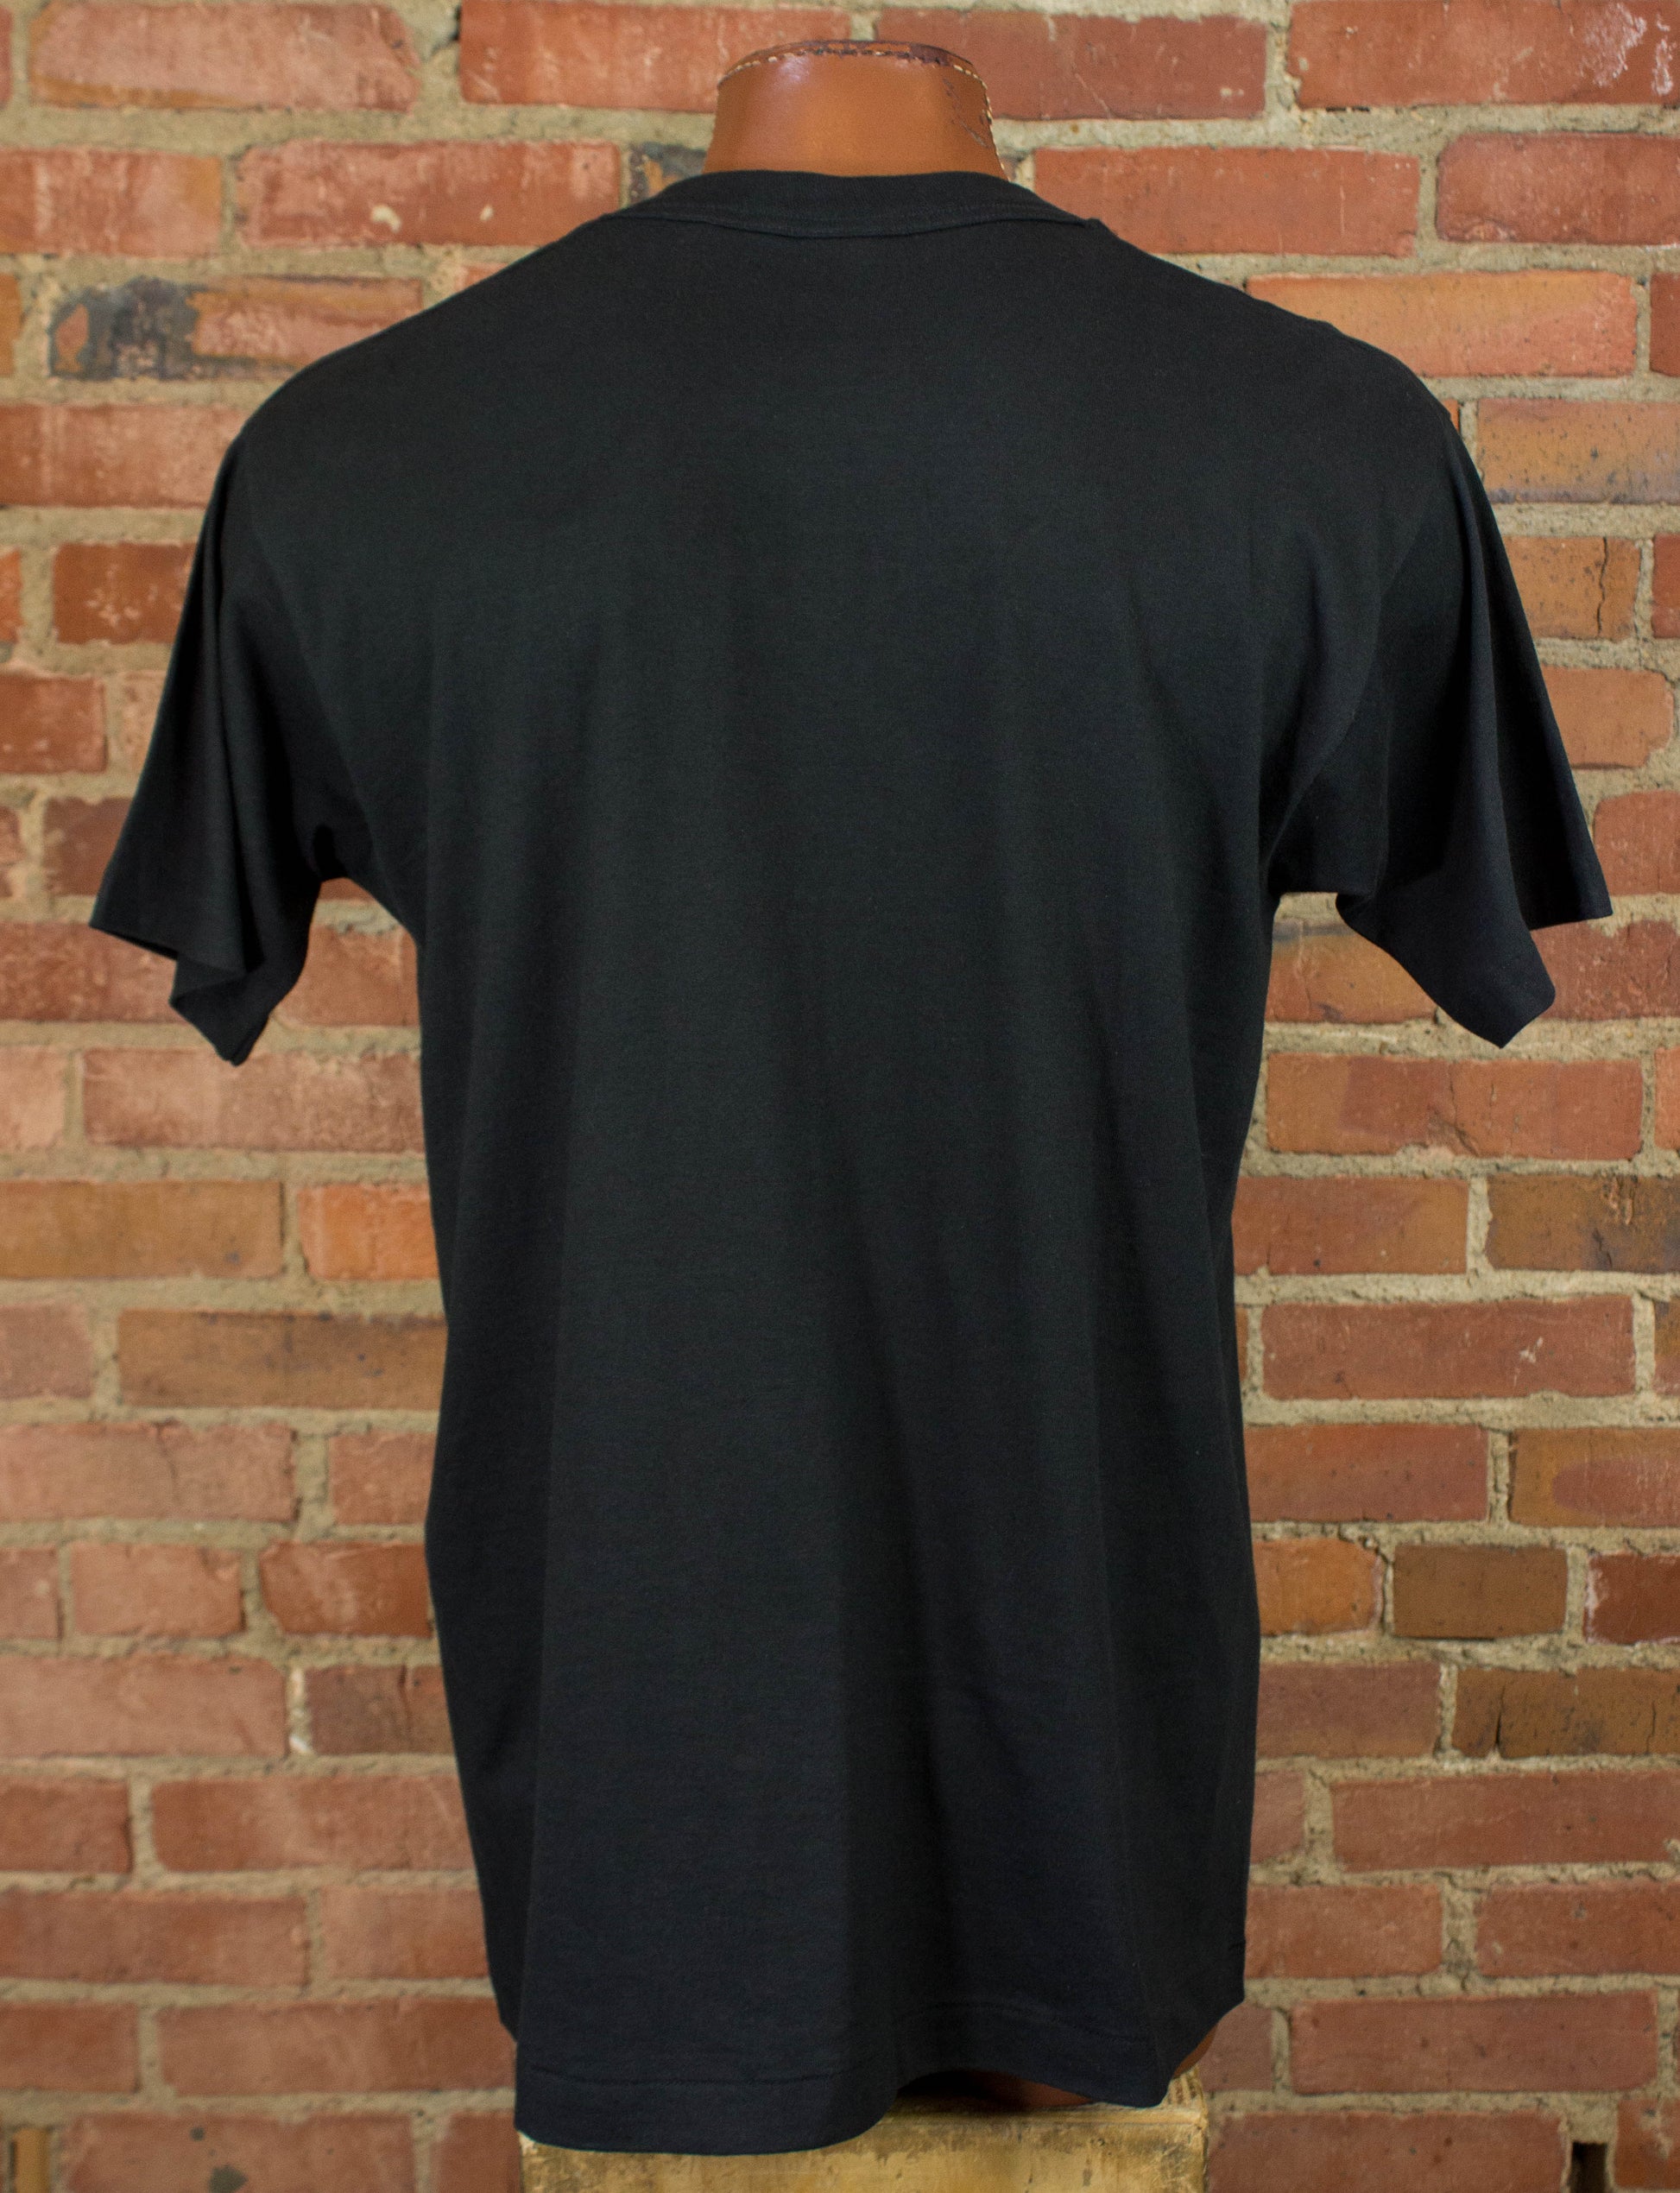 Vintage Arlo Guthrie Concert T Shirt 90s Black and White Portrait XL